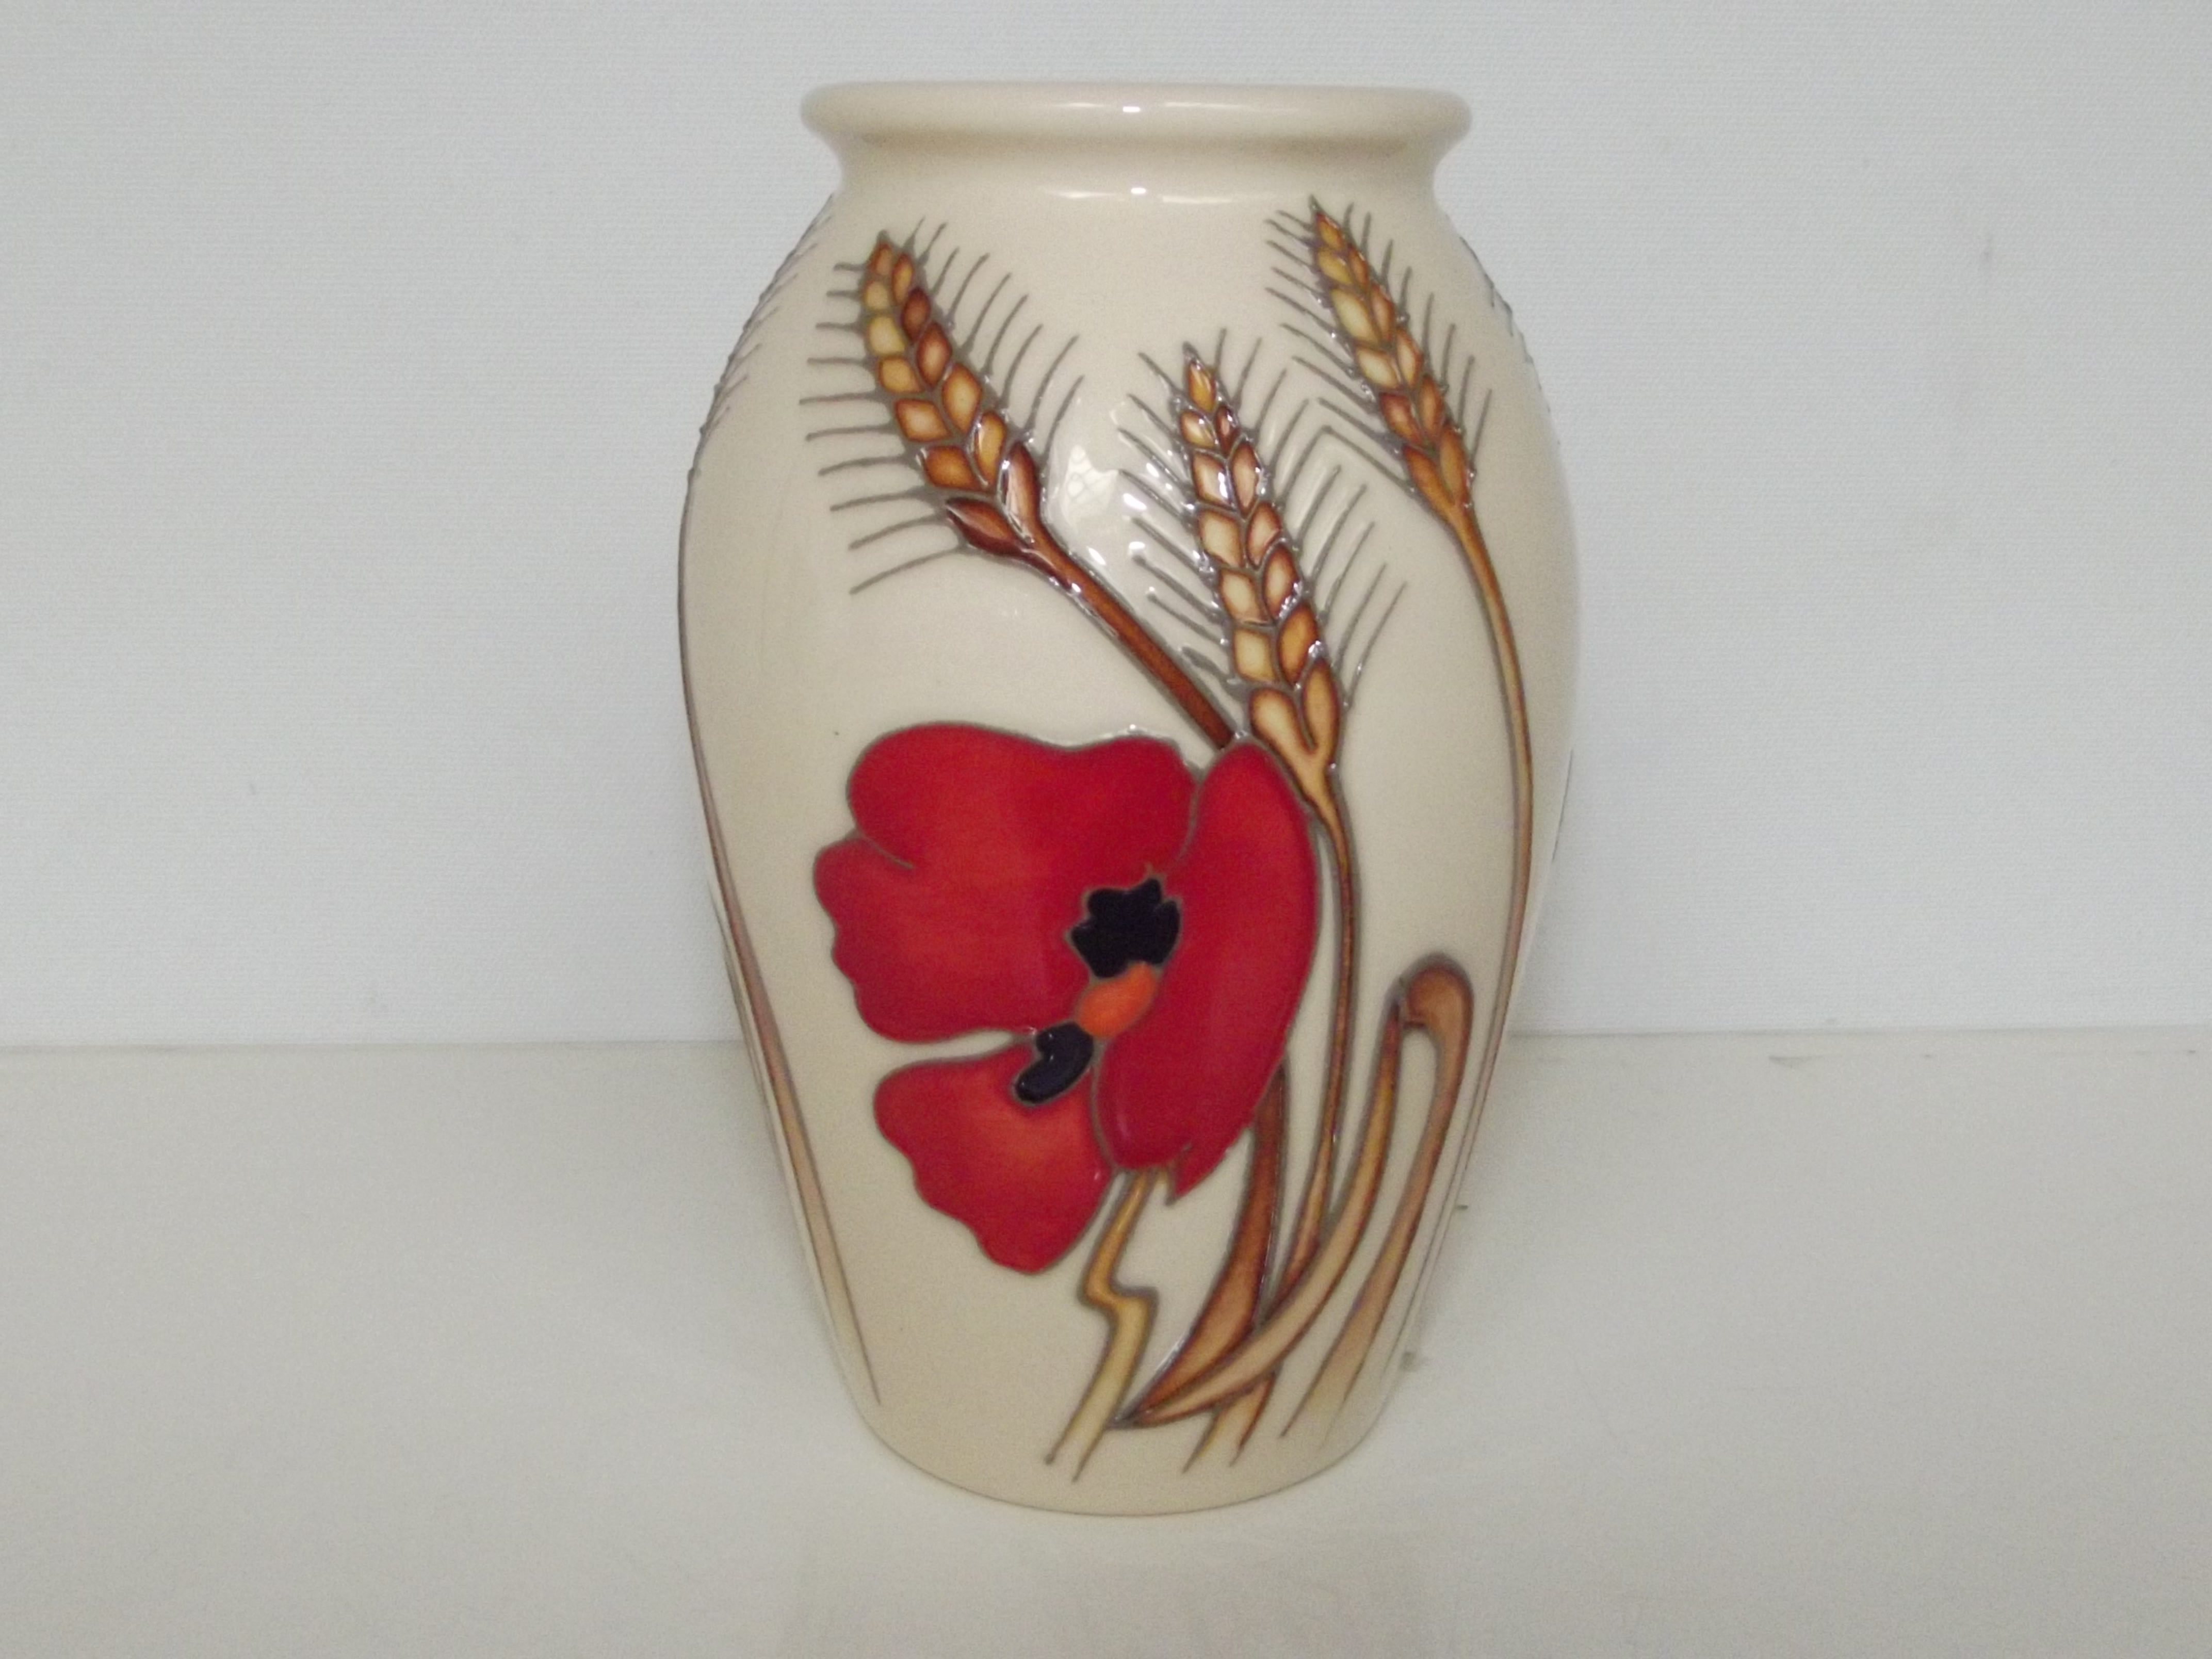 Moorcroft 'Harvest Poppy' vase, height 14cm